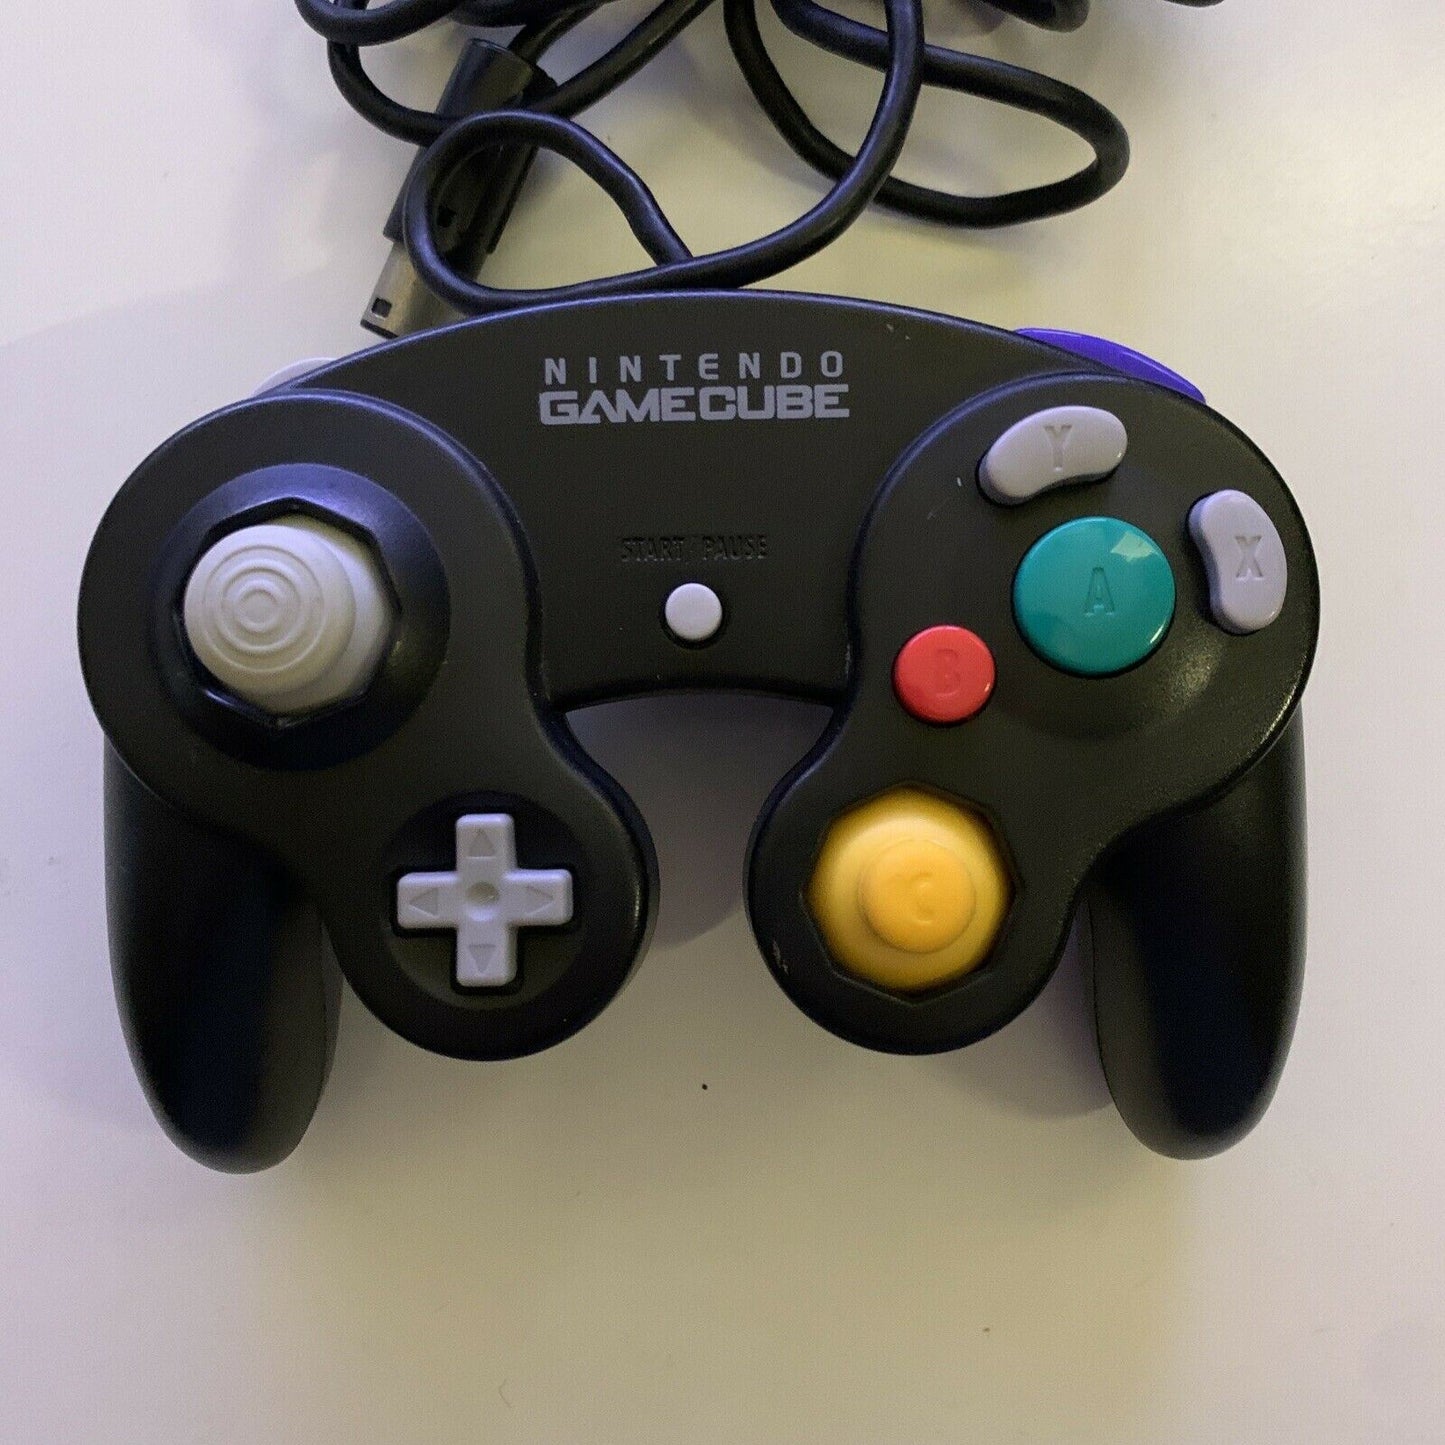 Official Nintendo GameCube Controller Jet Black DOL-003. Joystick & button vgood